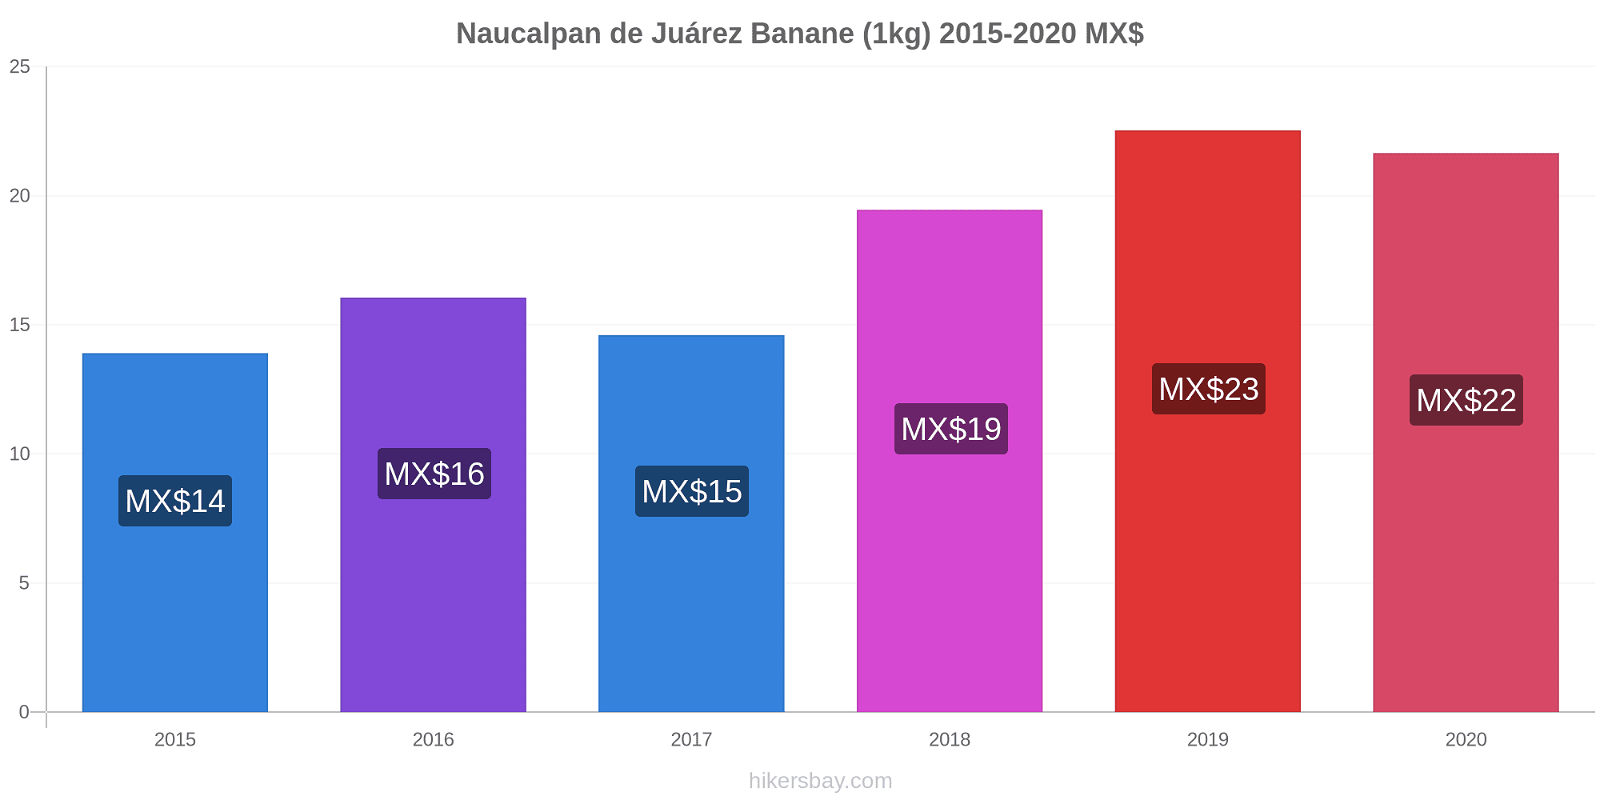 Naucalpan de Juárez variazioni di prezzo Banana (1kg) hikersbay.com